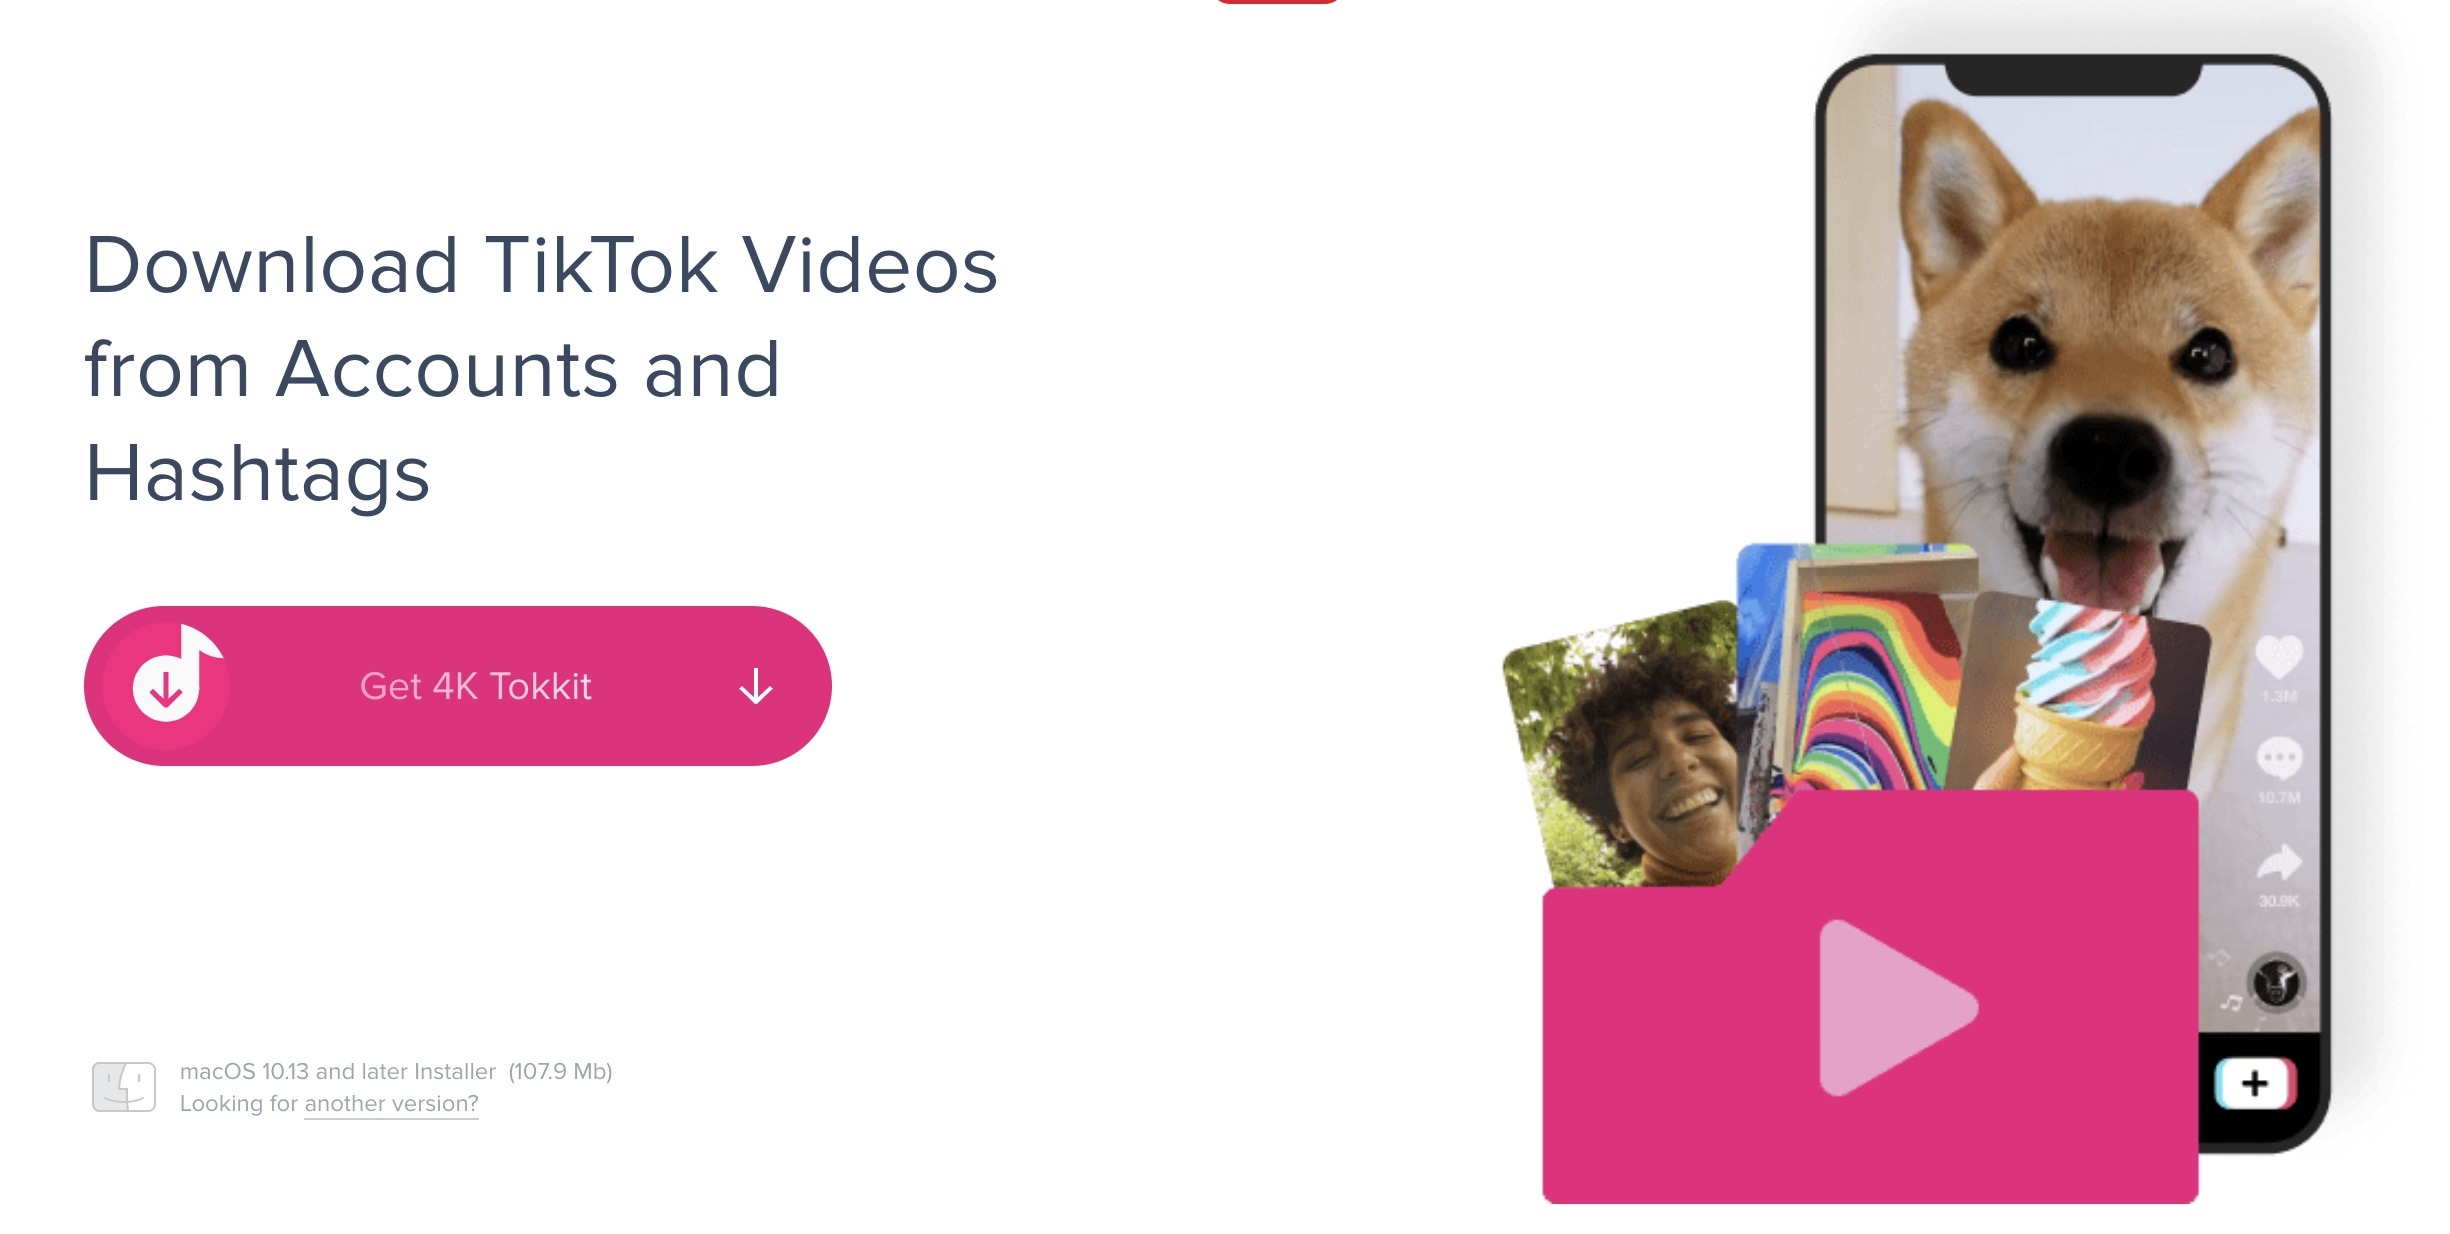 4k Tokkit TikTok-Video-Downloader